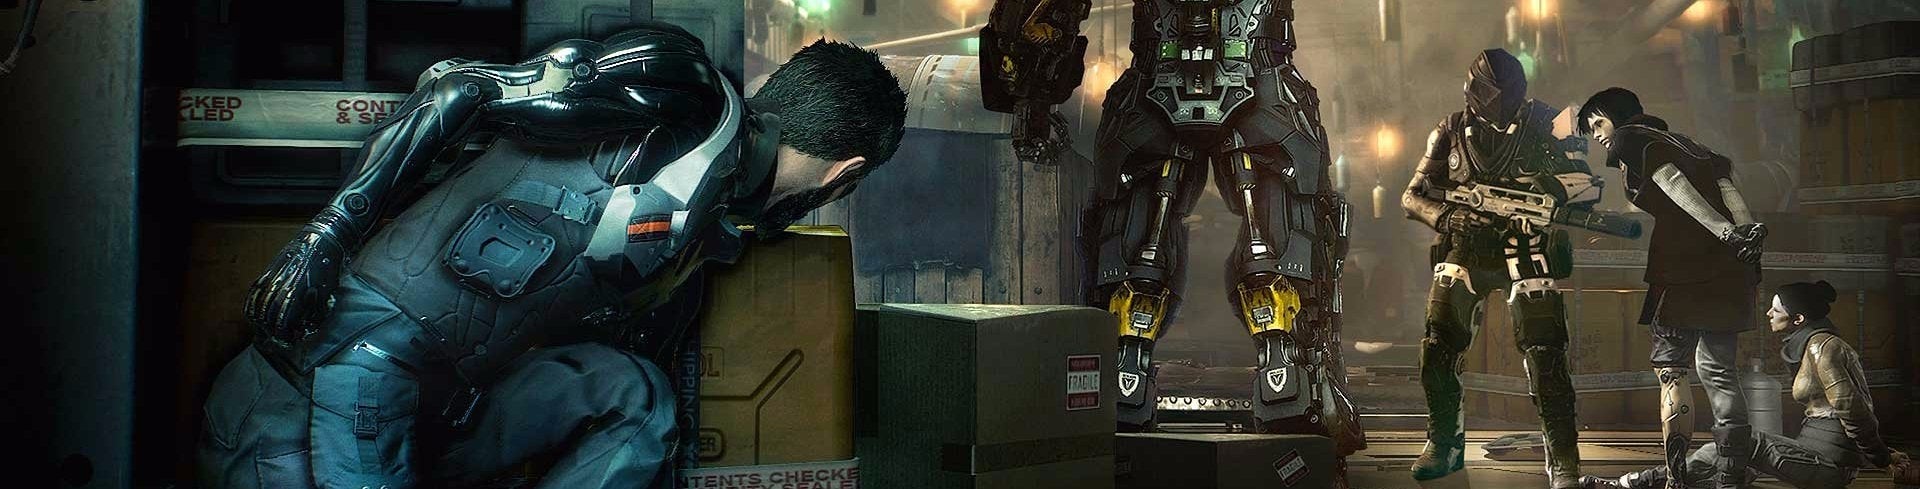 Imagen para Análisis de Deus Ex: Mankind Divided